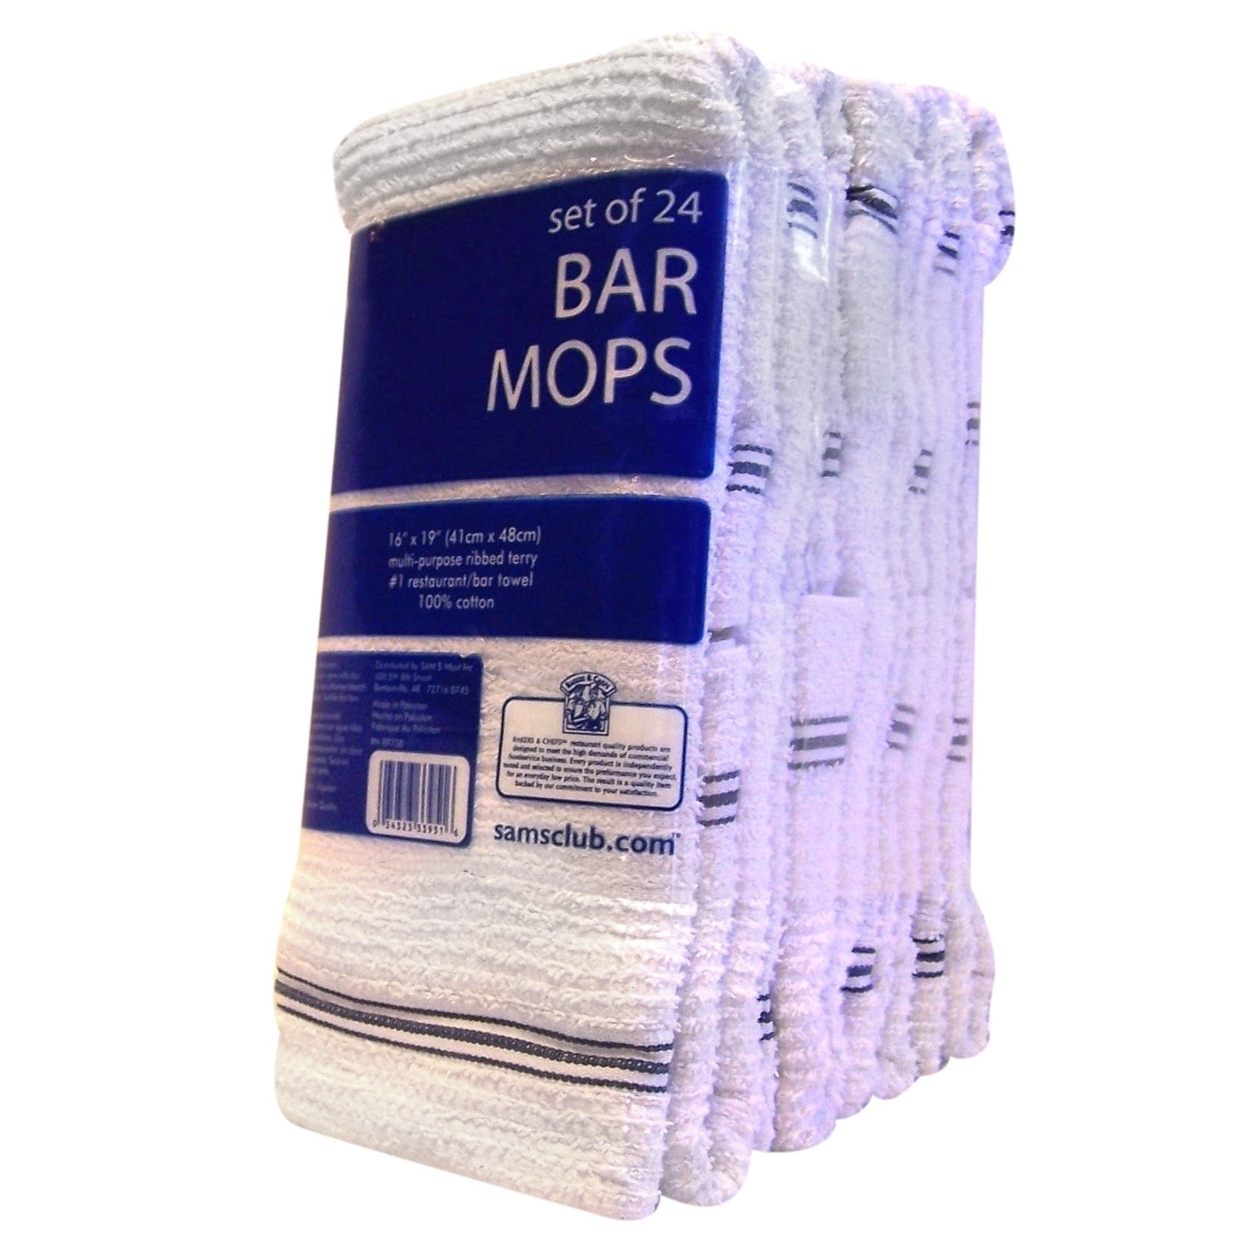 Member's Mark Bar Mops - 16 X 19 - 24 Count